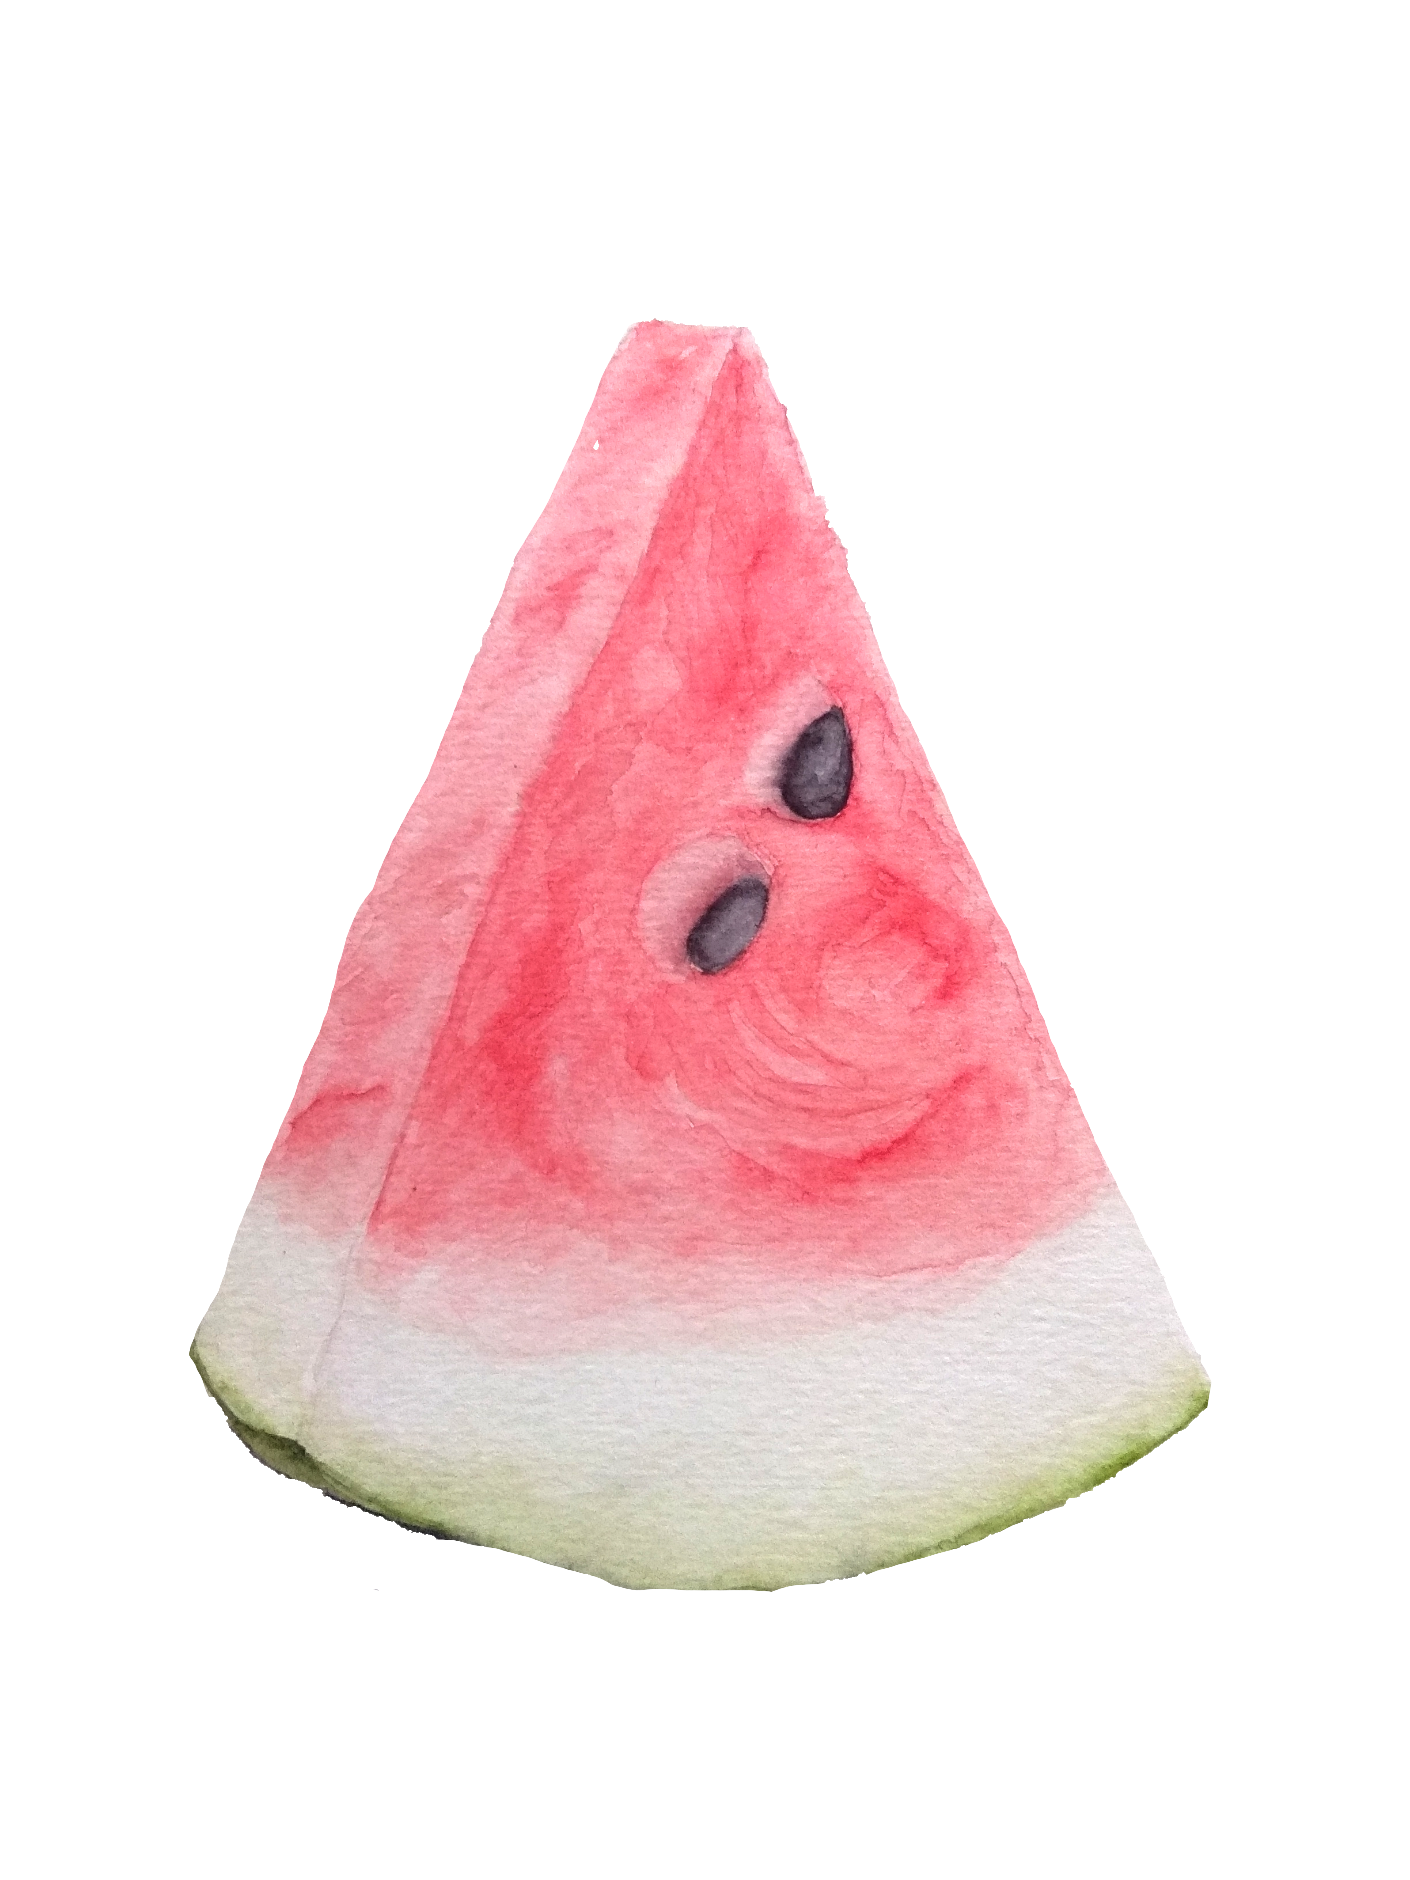 watermelon-80